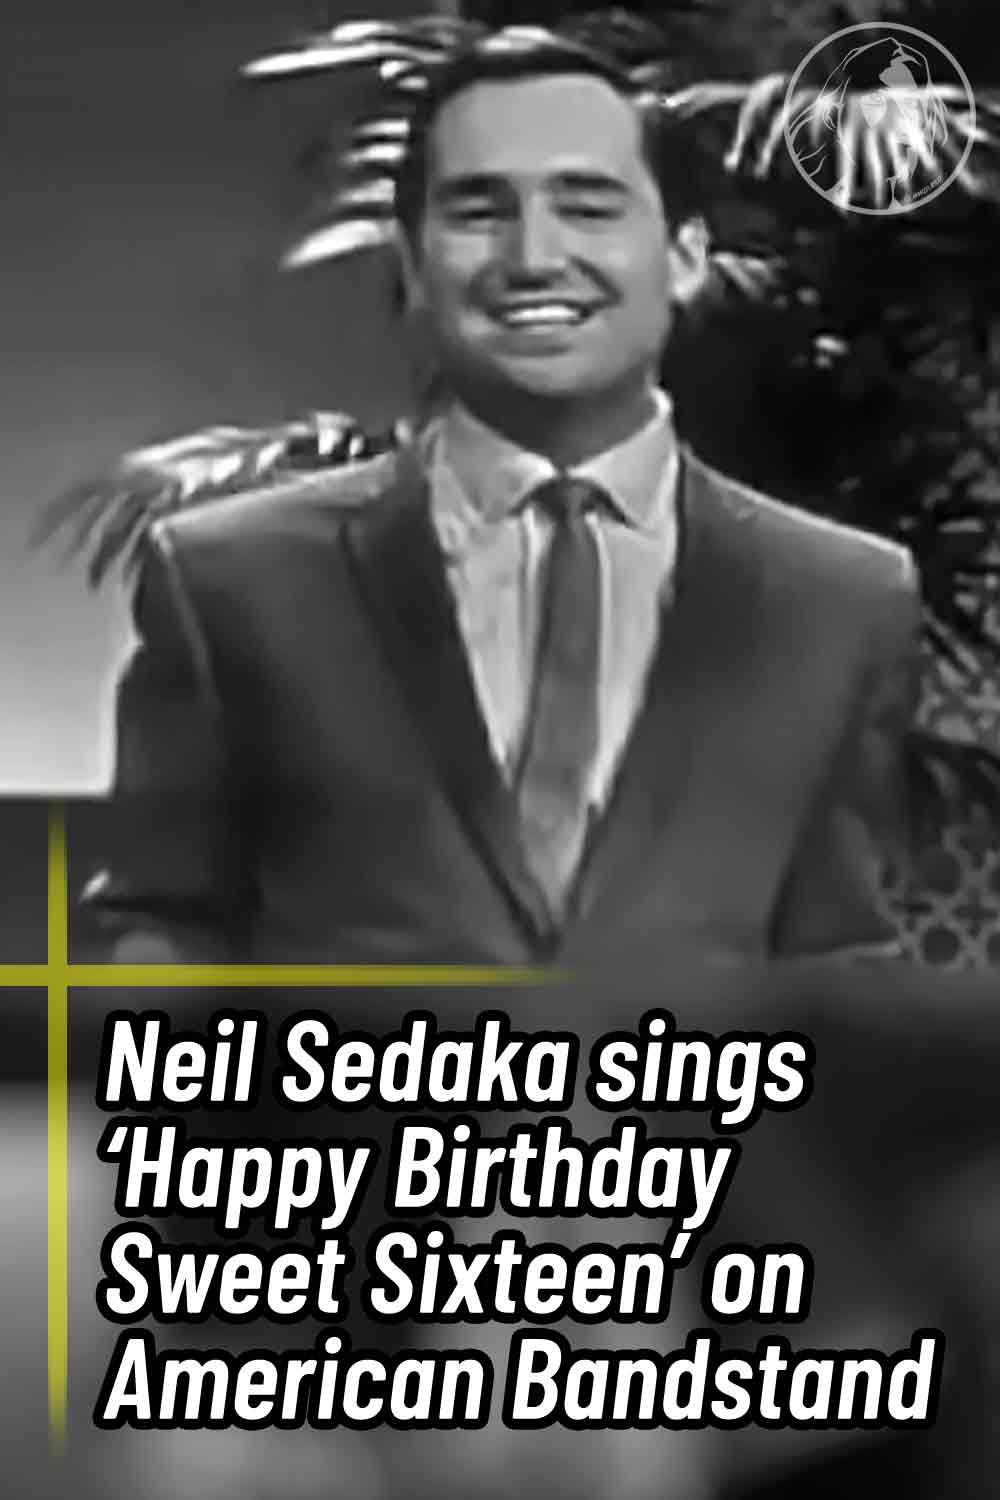 Neil Sedaka sings ‘Happy Birthday Sweet Sixteen’ on American Bandstand